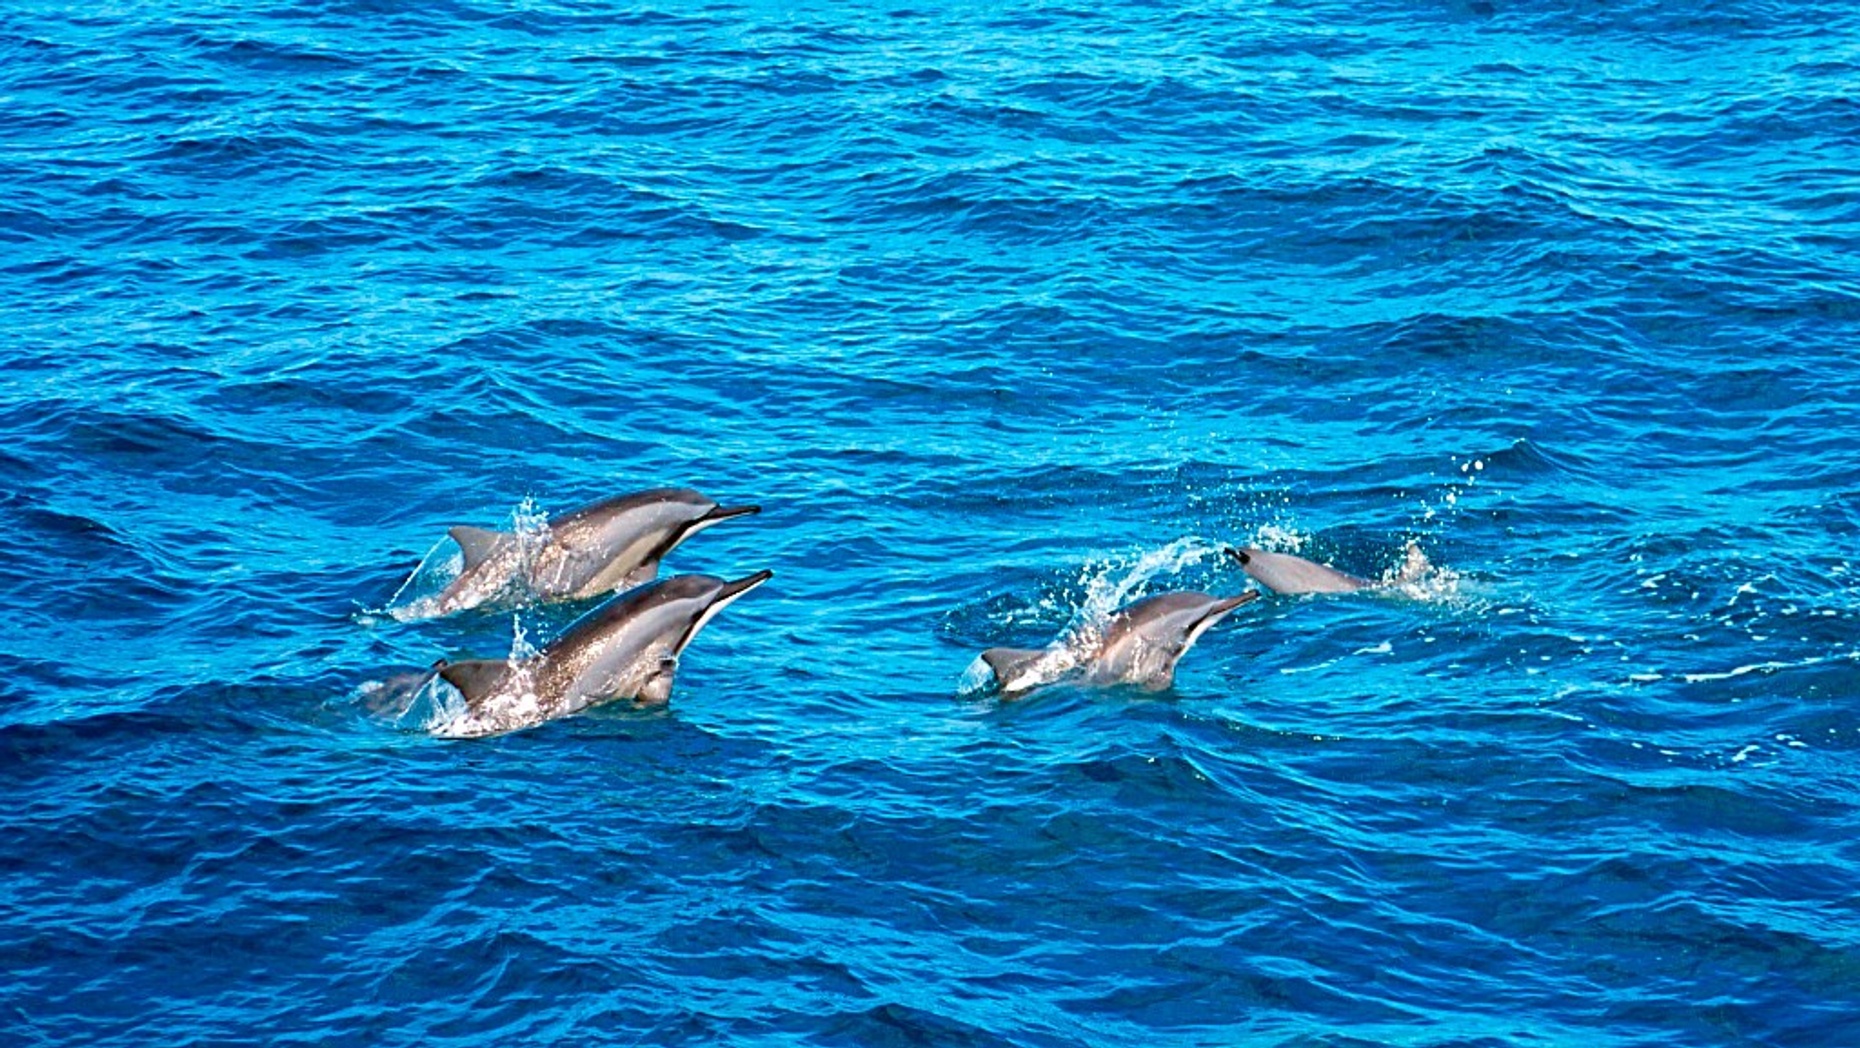 Two-Hour Dolphin Boat Tour around Hilton Head